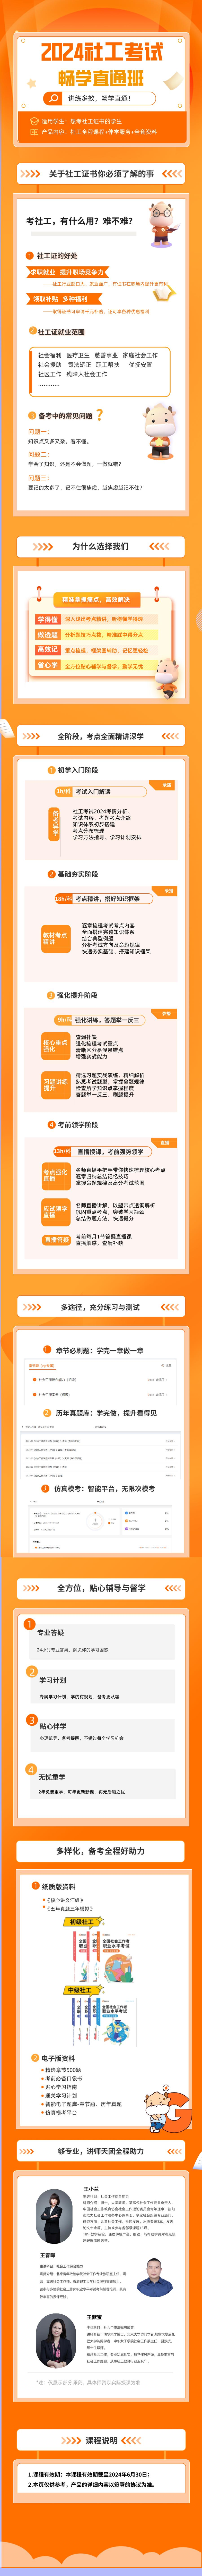 https://simg01.gaodunwangxiao.com/uploadfiles/product-center/202404/19/bcd05_20240419112650.jpg